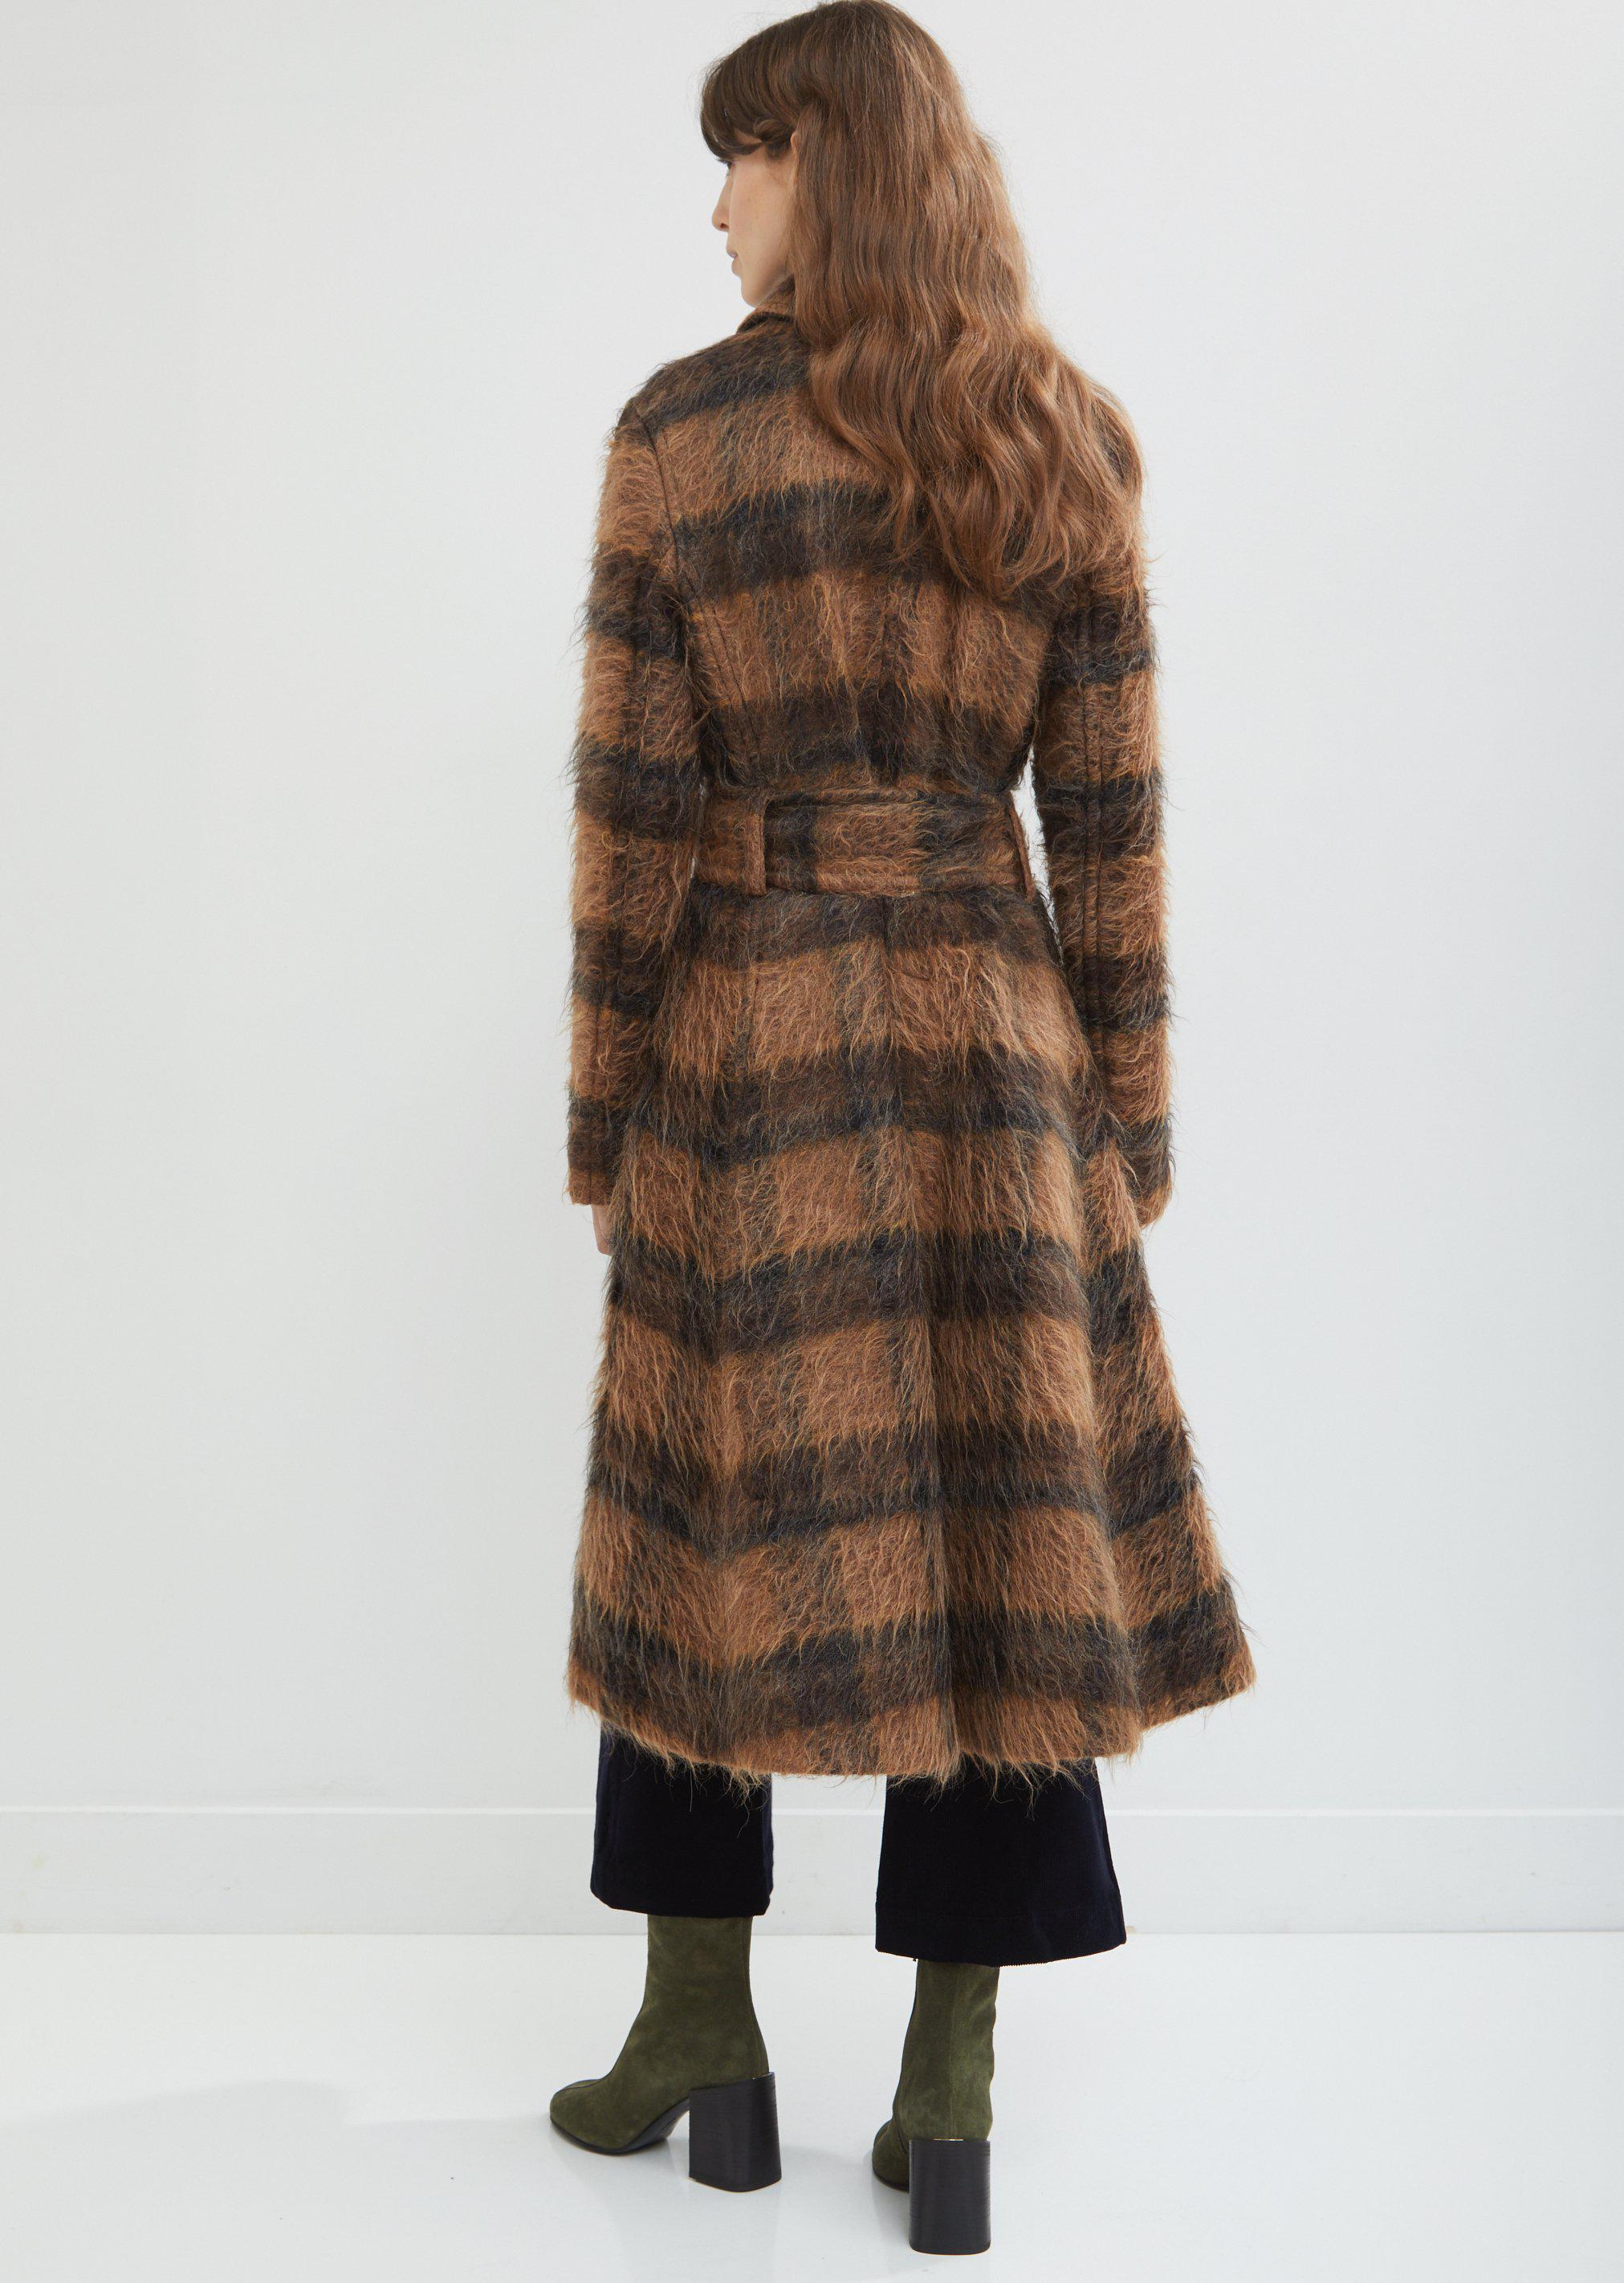 Acne Studios Wool Mohair Alpaca Check Coat in Camel / Brown (Brown) - Lyst